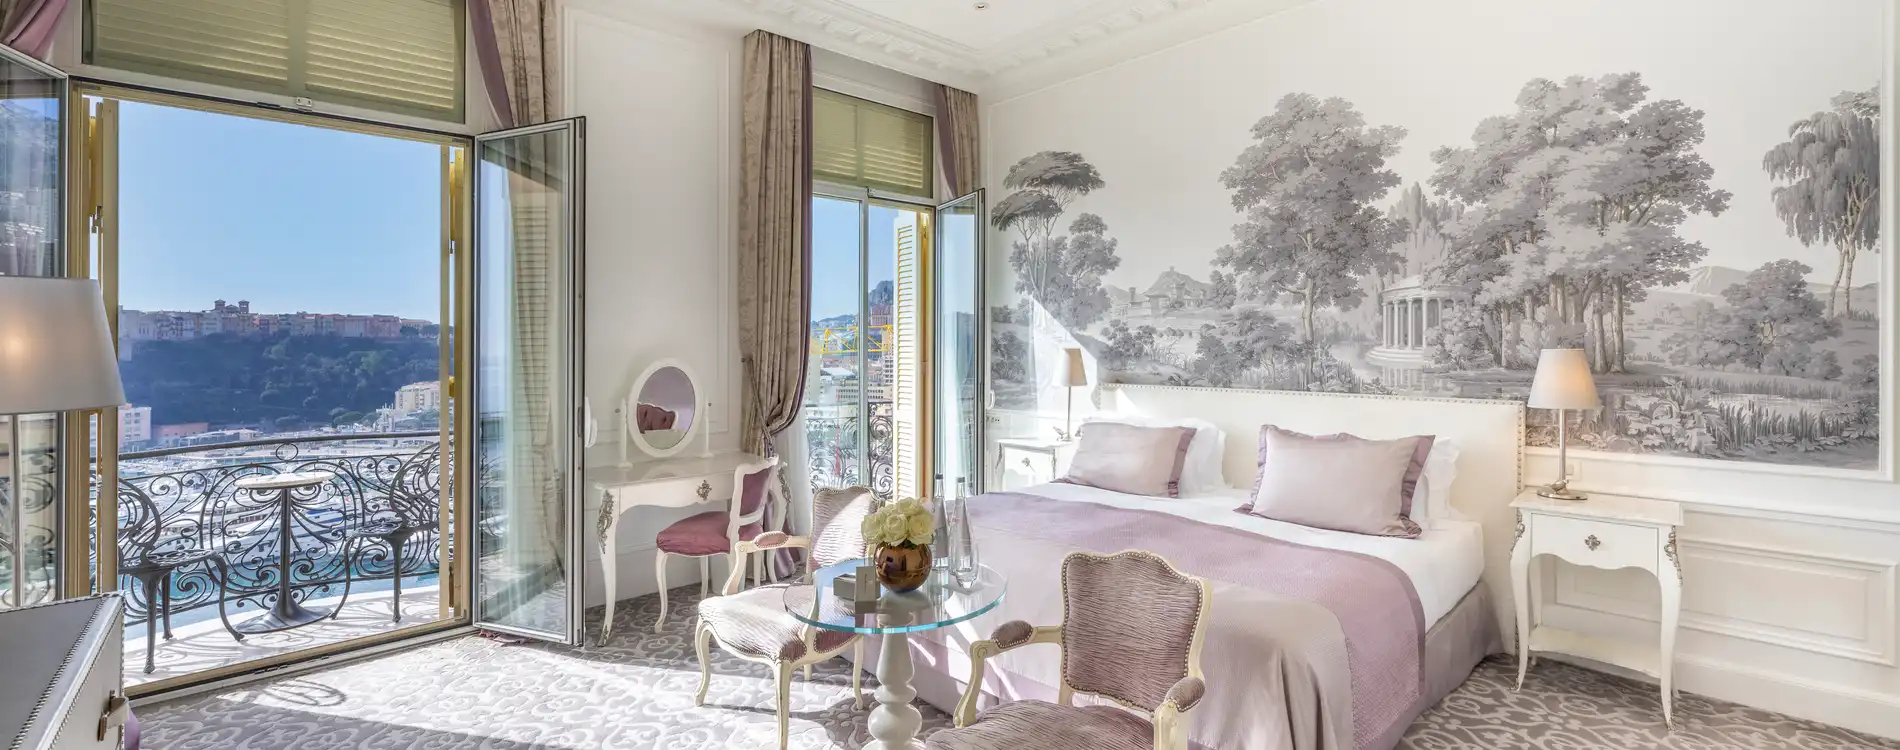 Hôtel Hermitage - Chambre Exclusive Vue mer avec Balcon 